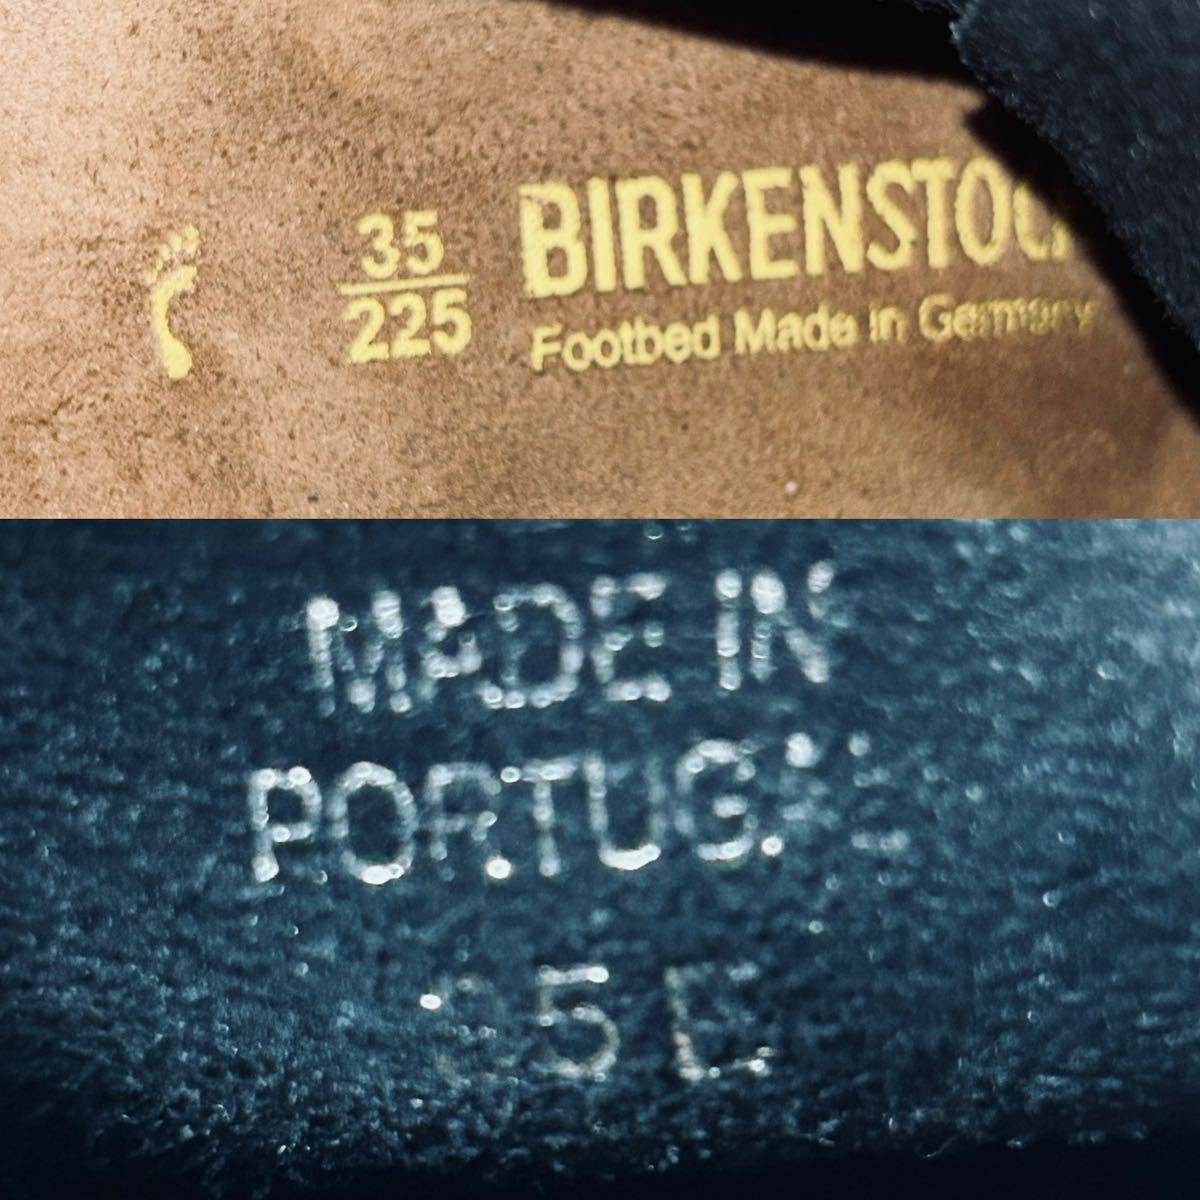 BIRKENSTOCK Birkenstock Maine leather shoes suede 35E 22.5cm black *AE